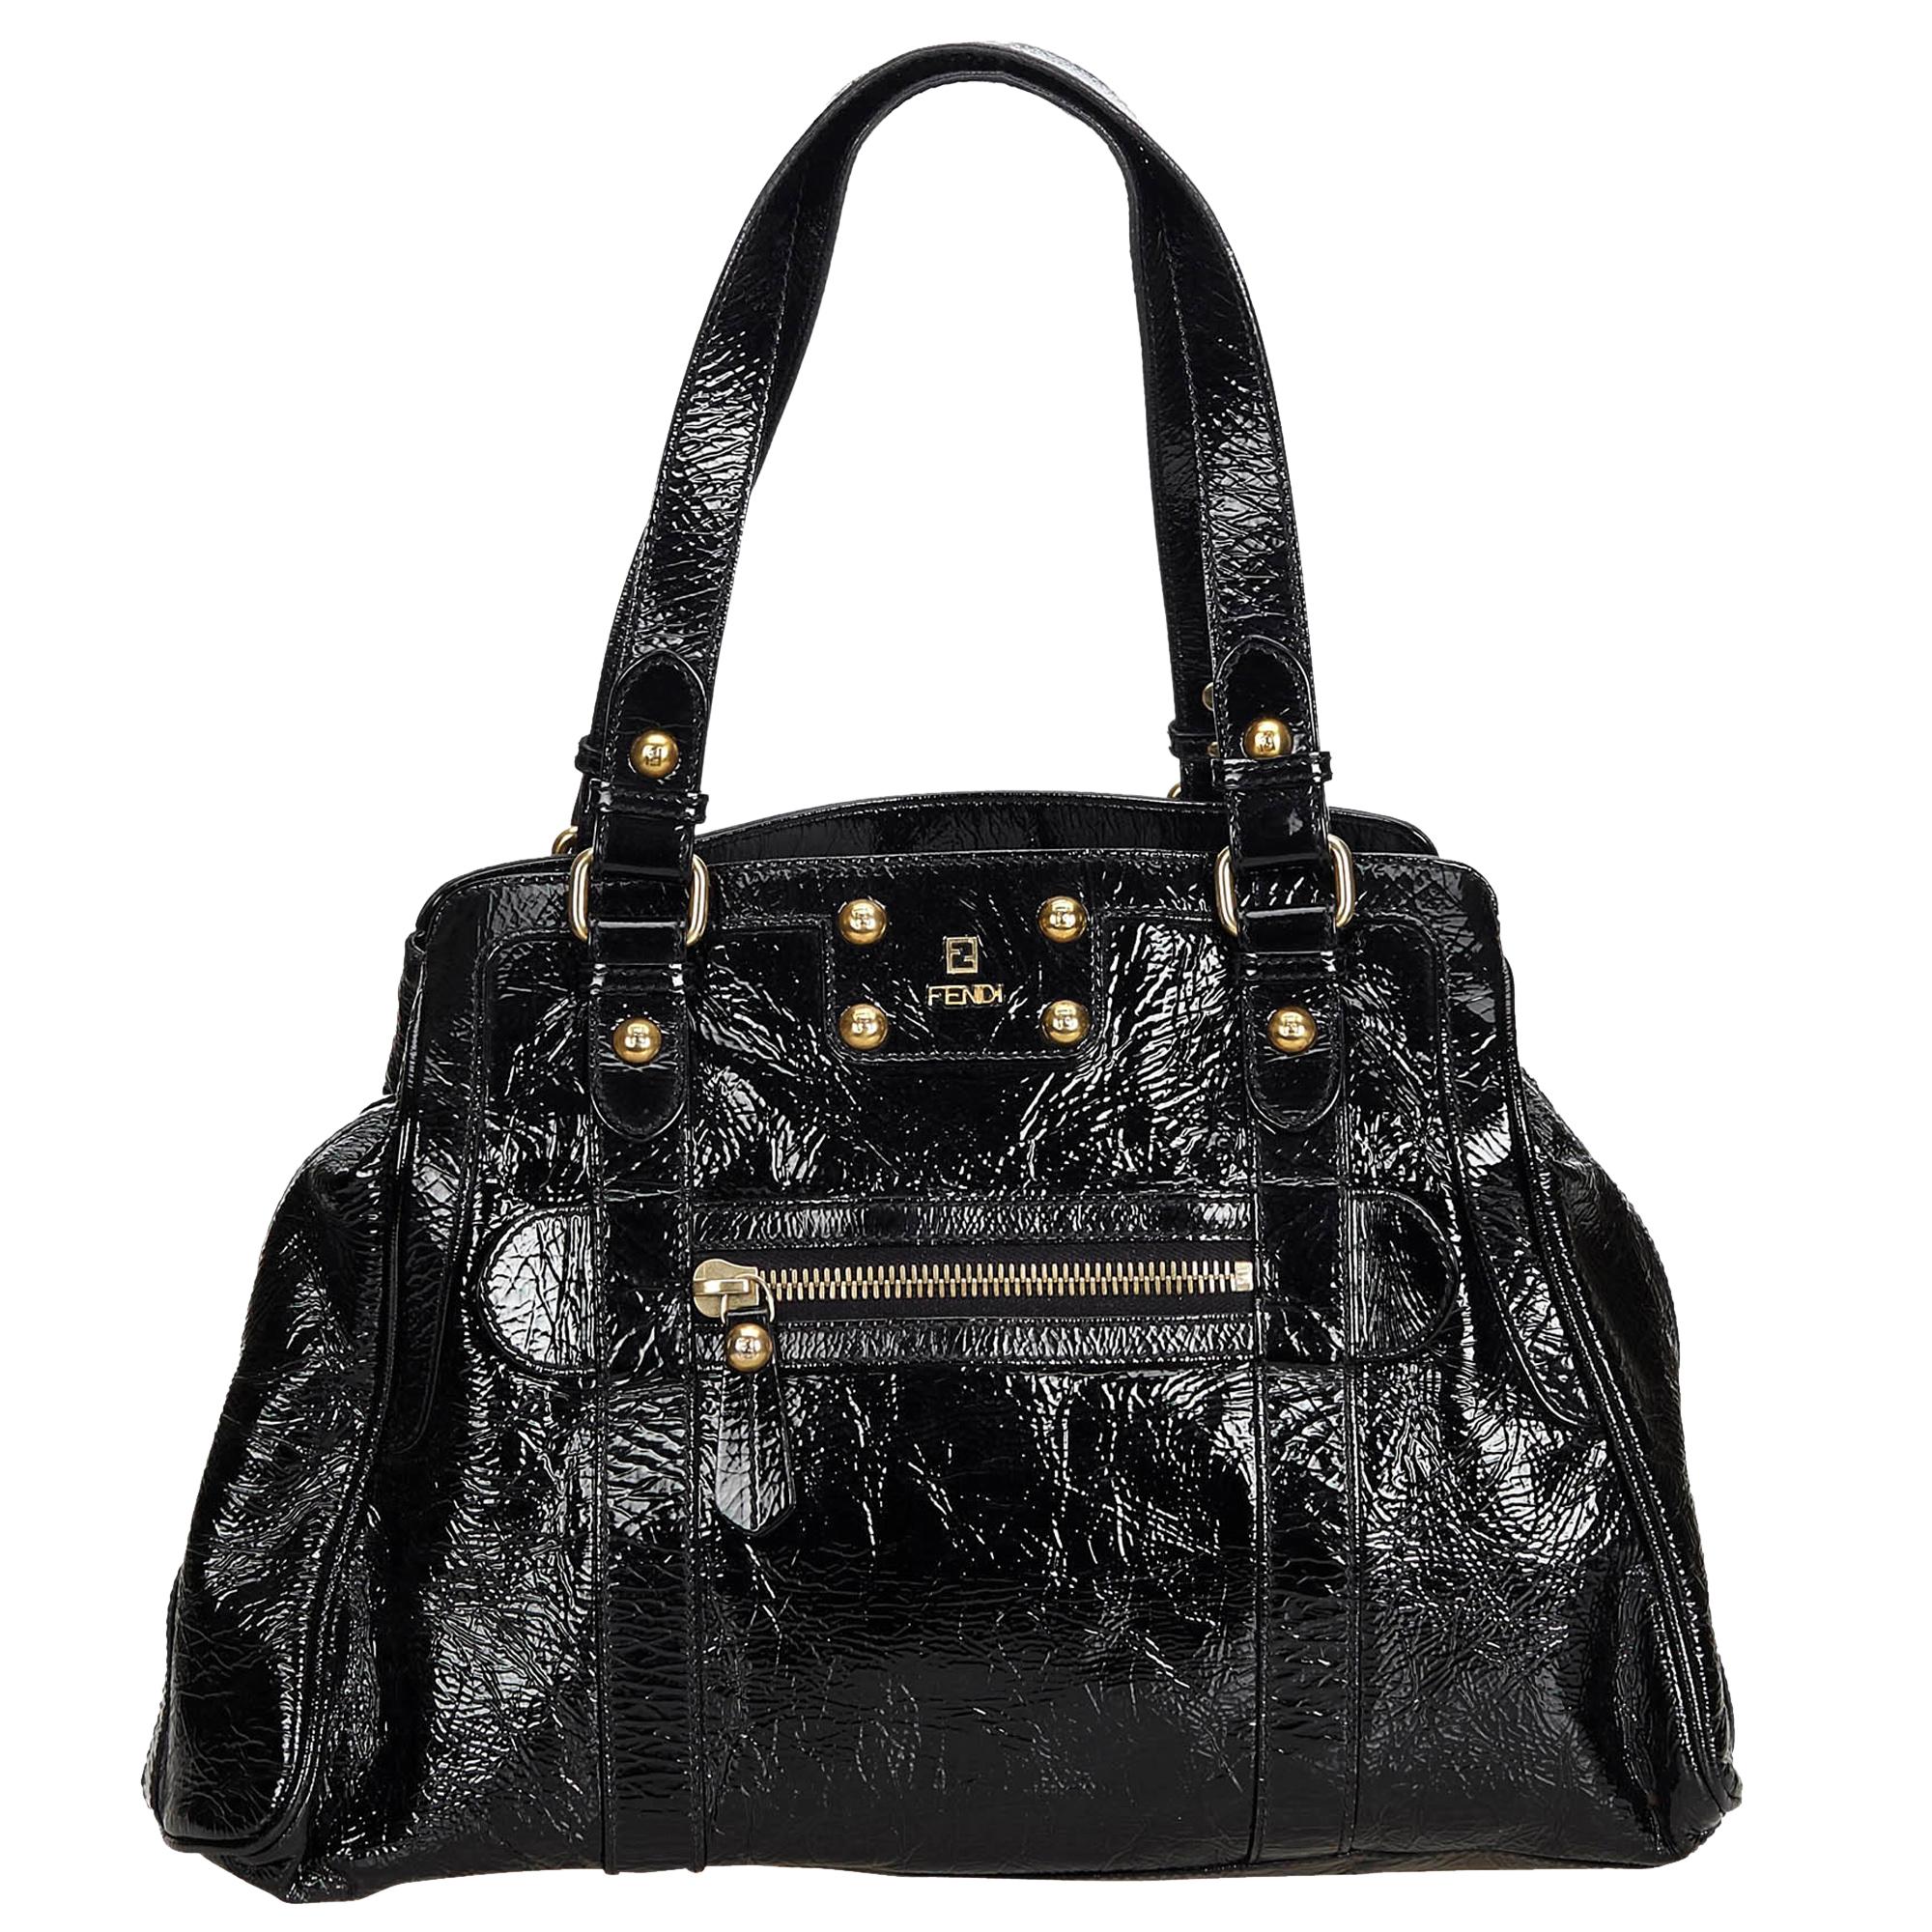 Fendi Black Patent Leather Bag Du Jour Tote